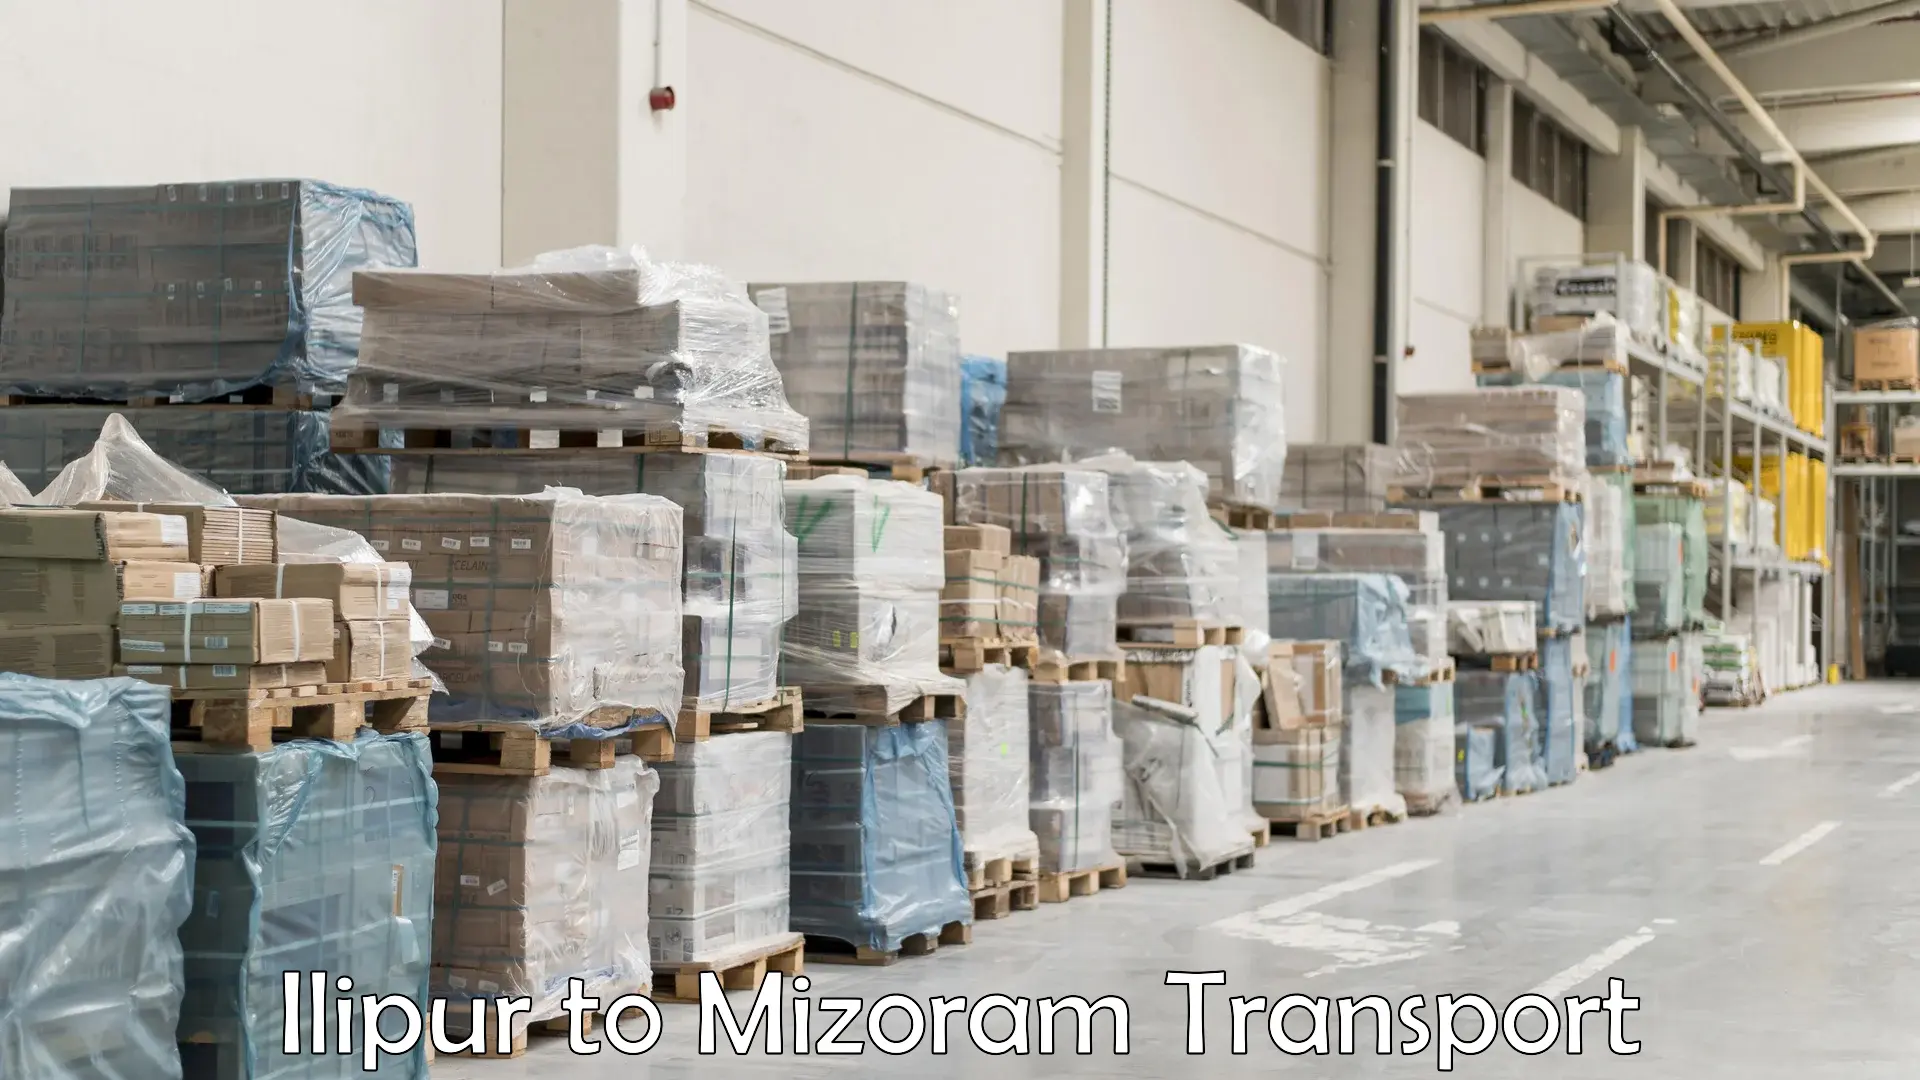 Transport in sharing Ilipur to Mizoram